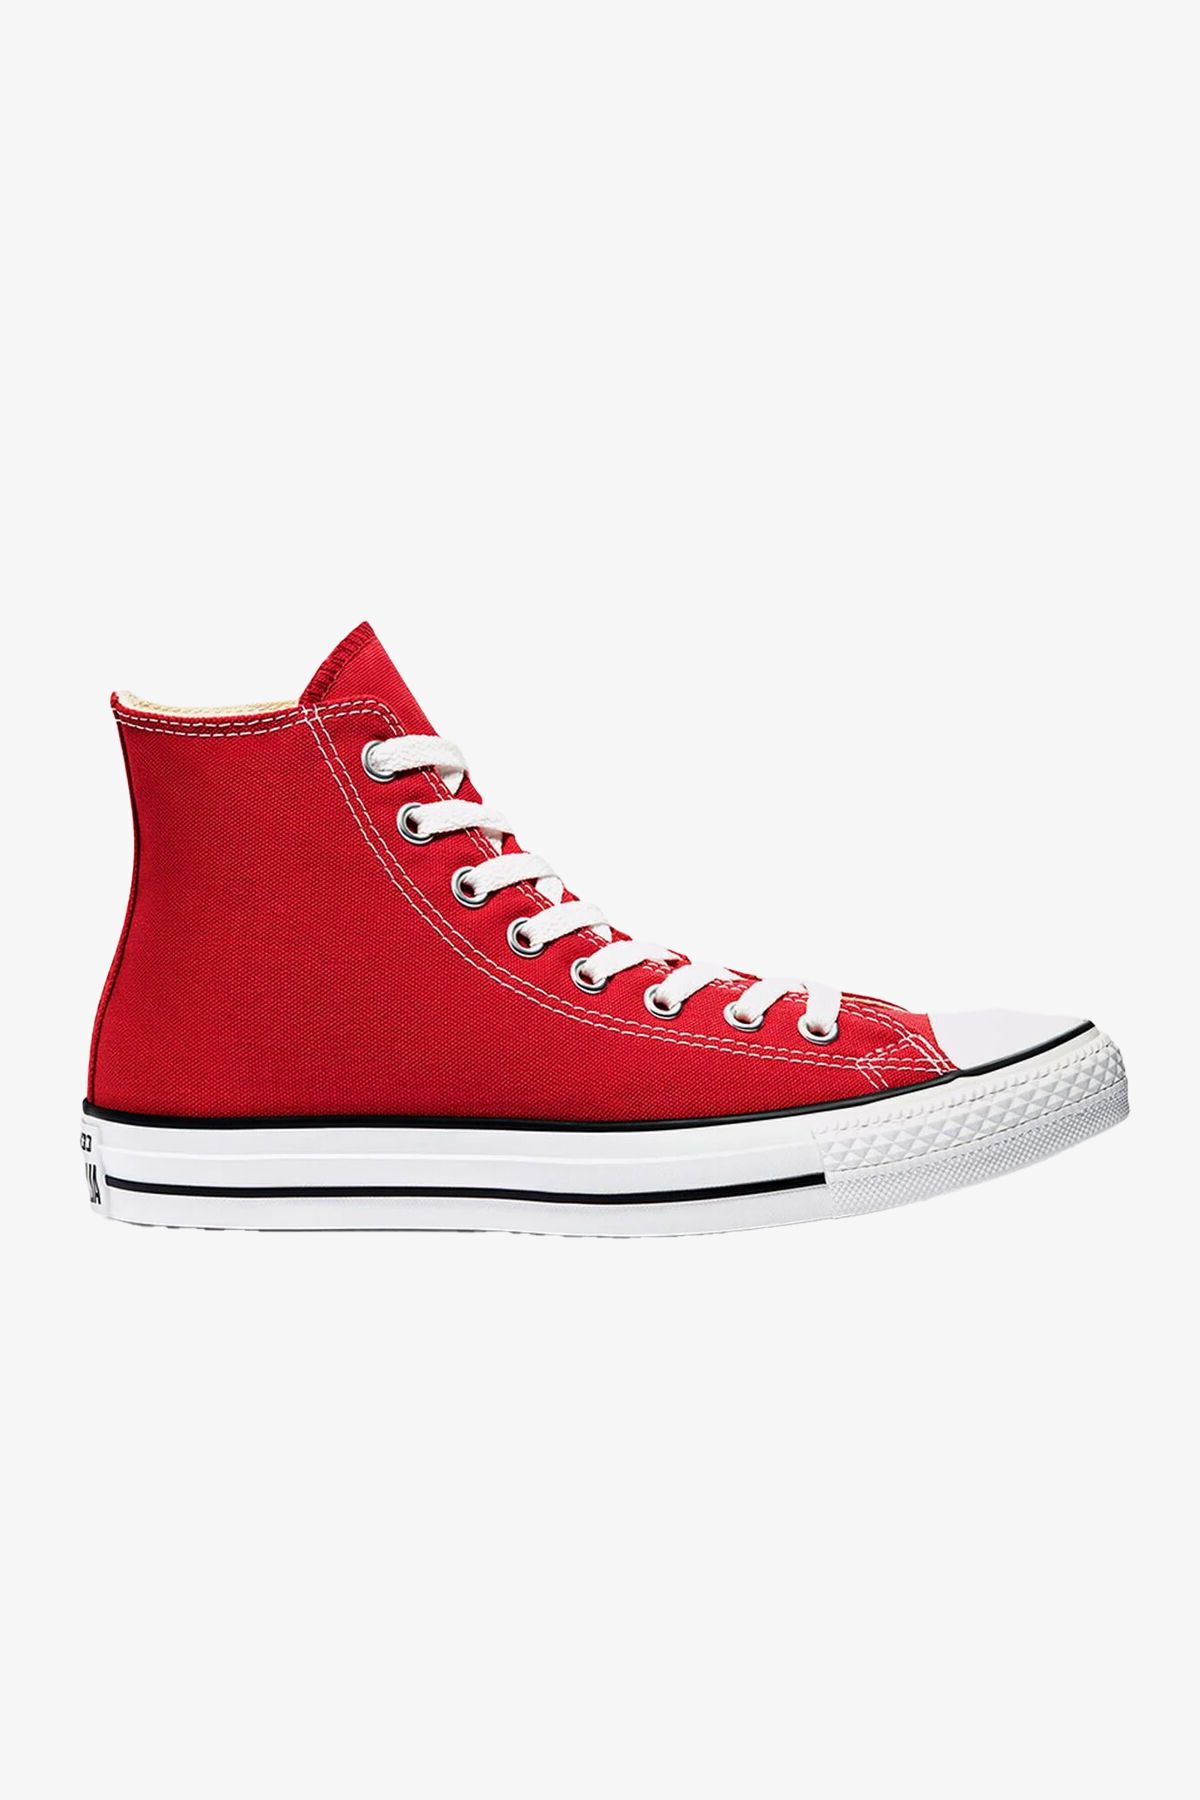 Converse Chuck Taylor All Star Classic Unisex Kırmızı Sneaker M9621C